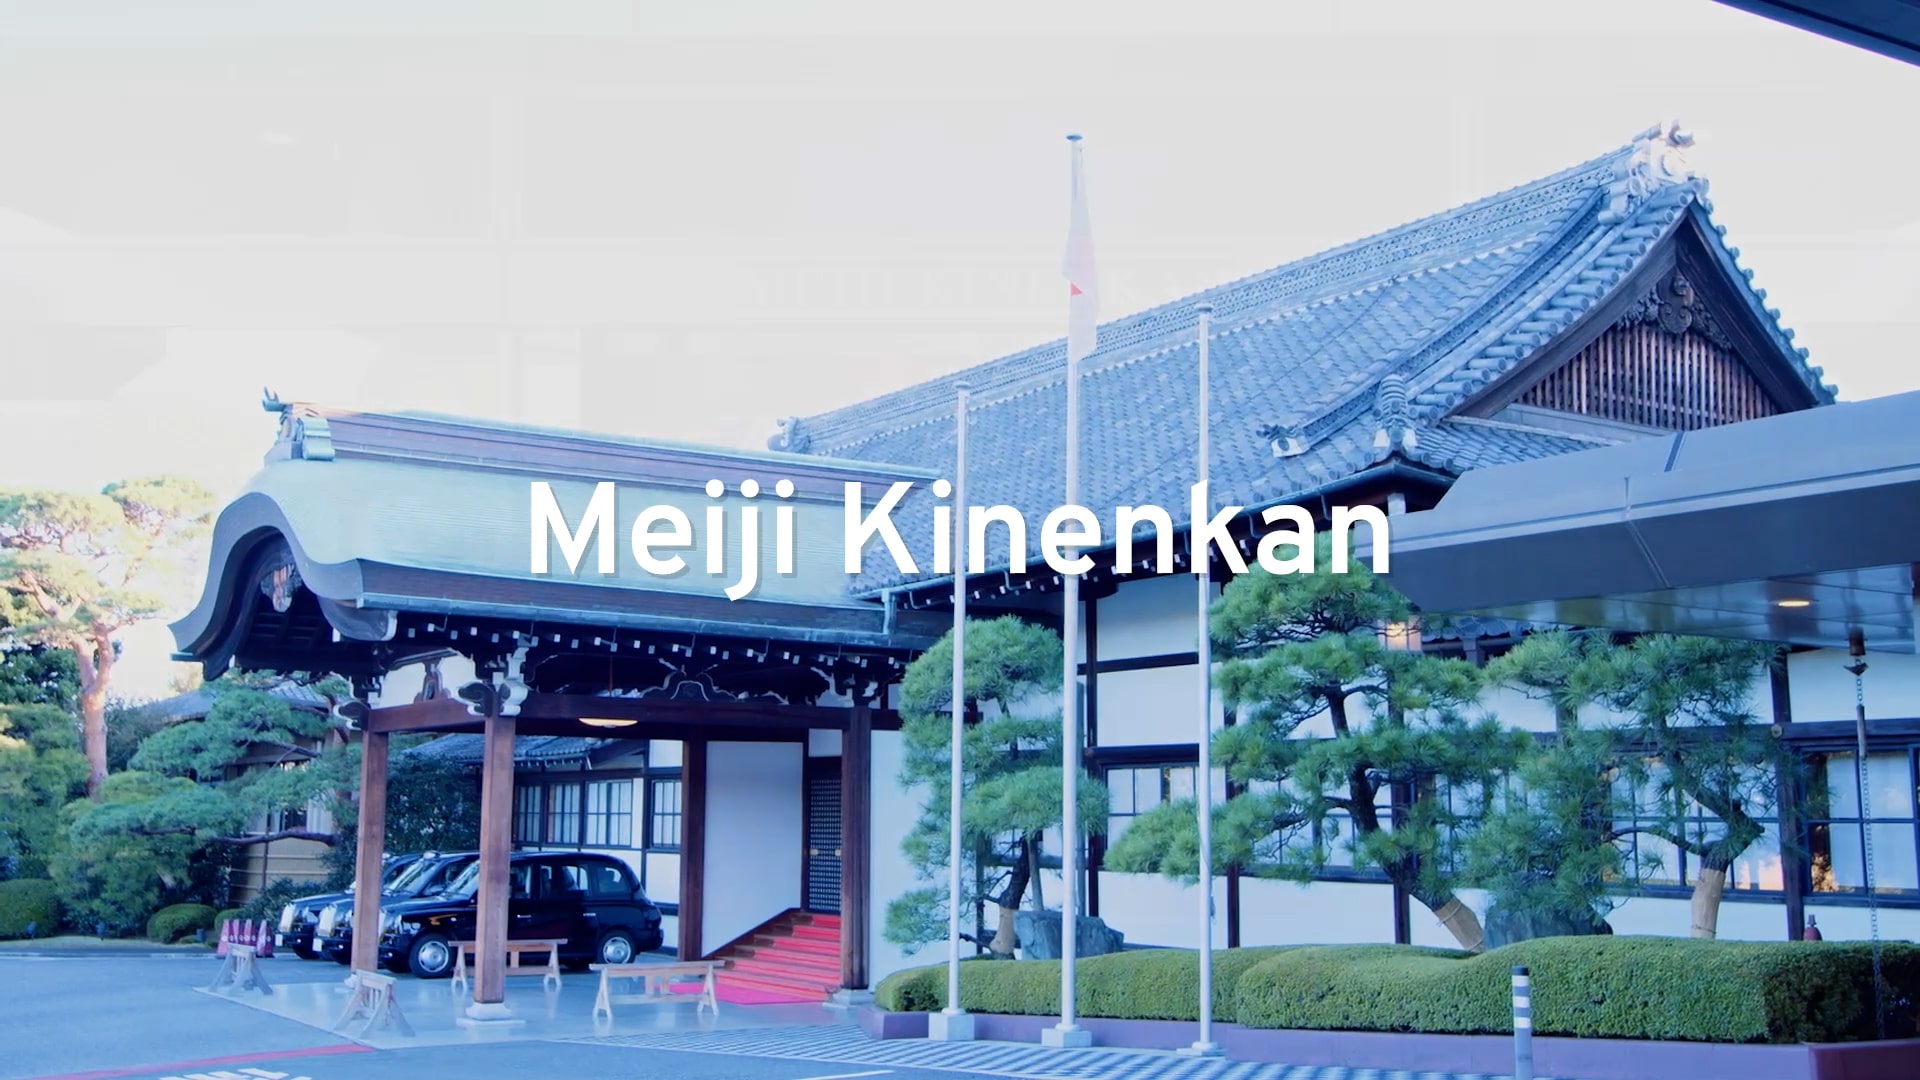 Meiji Kinenkan